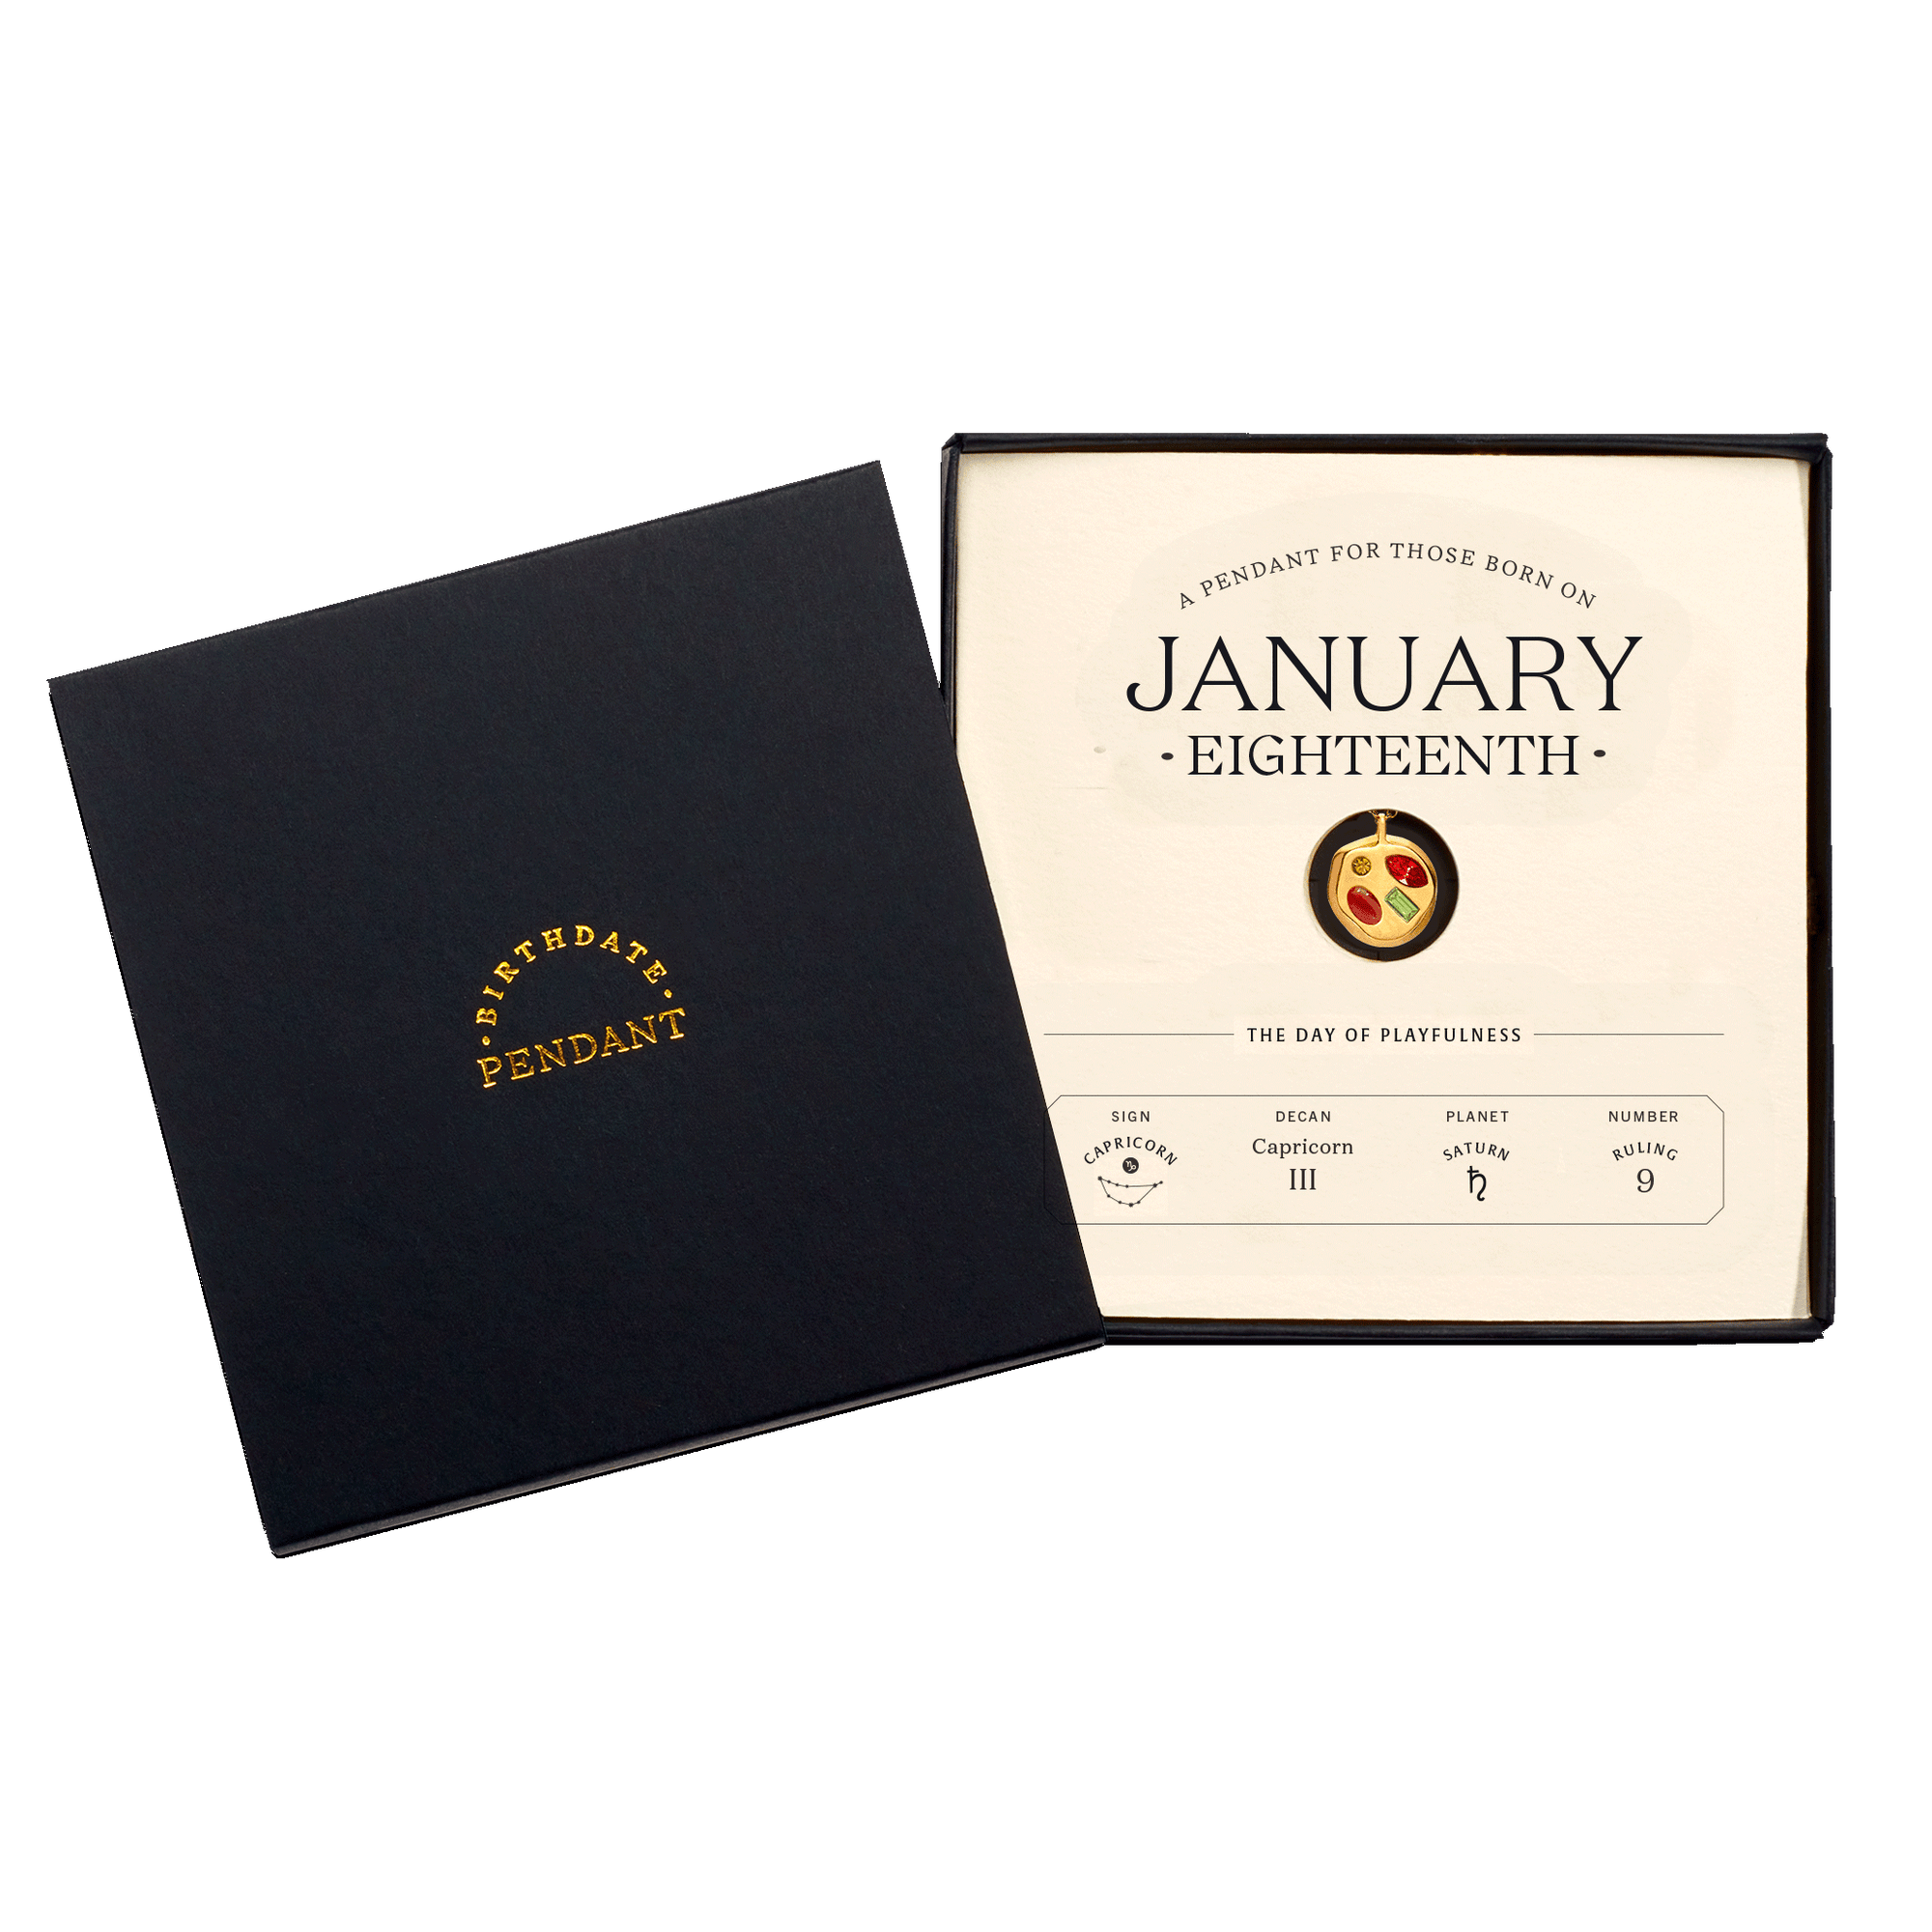 The January Eighteenth Pendant inside its box